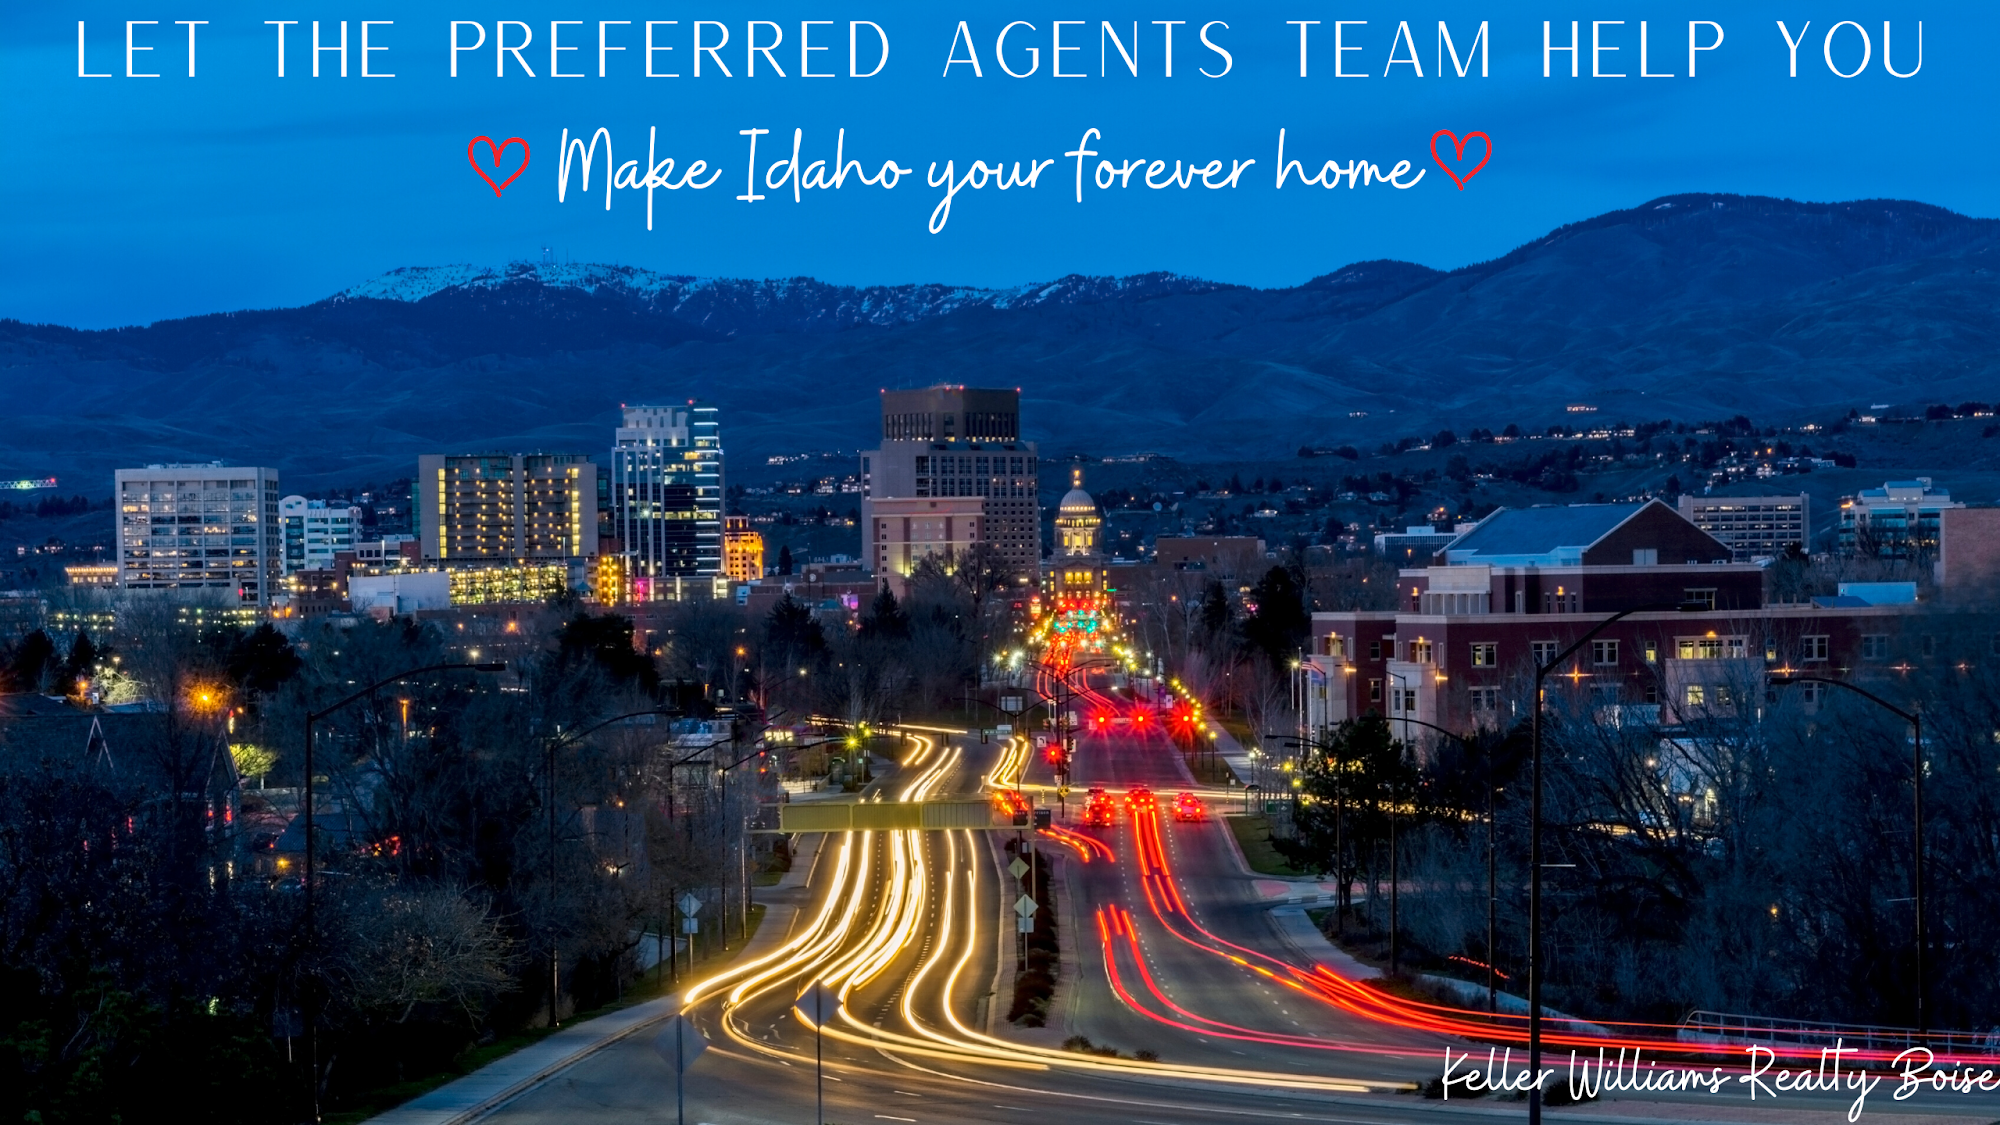 Keller Williams Realty Boise: The Preferred Agents Team